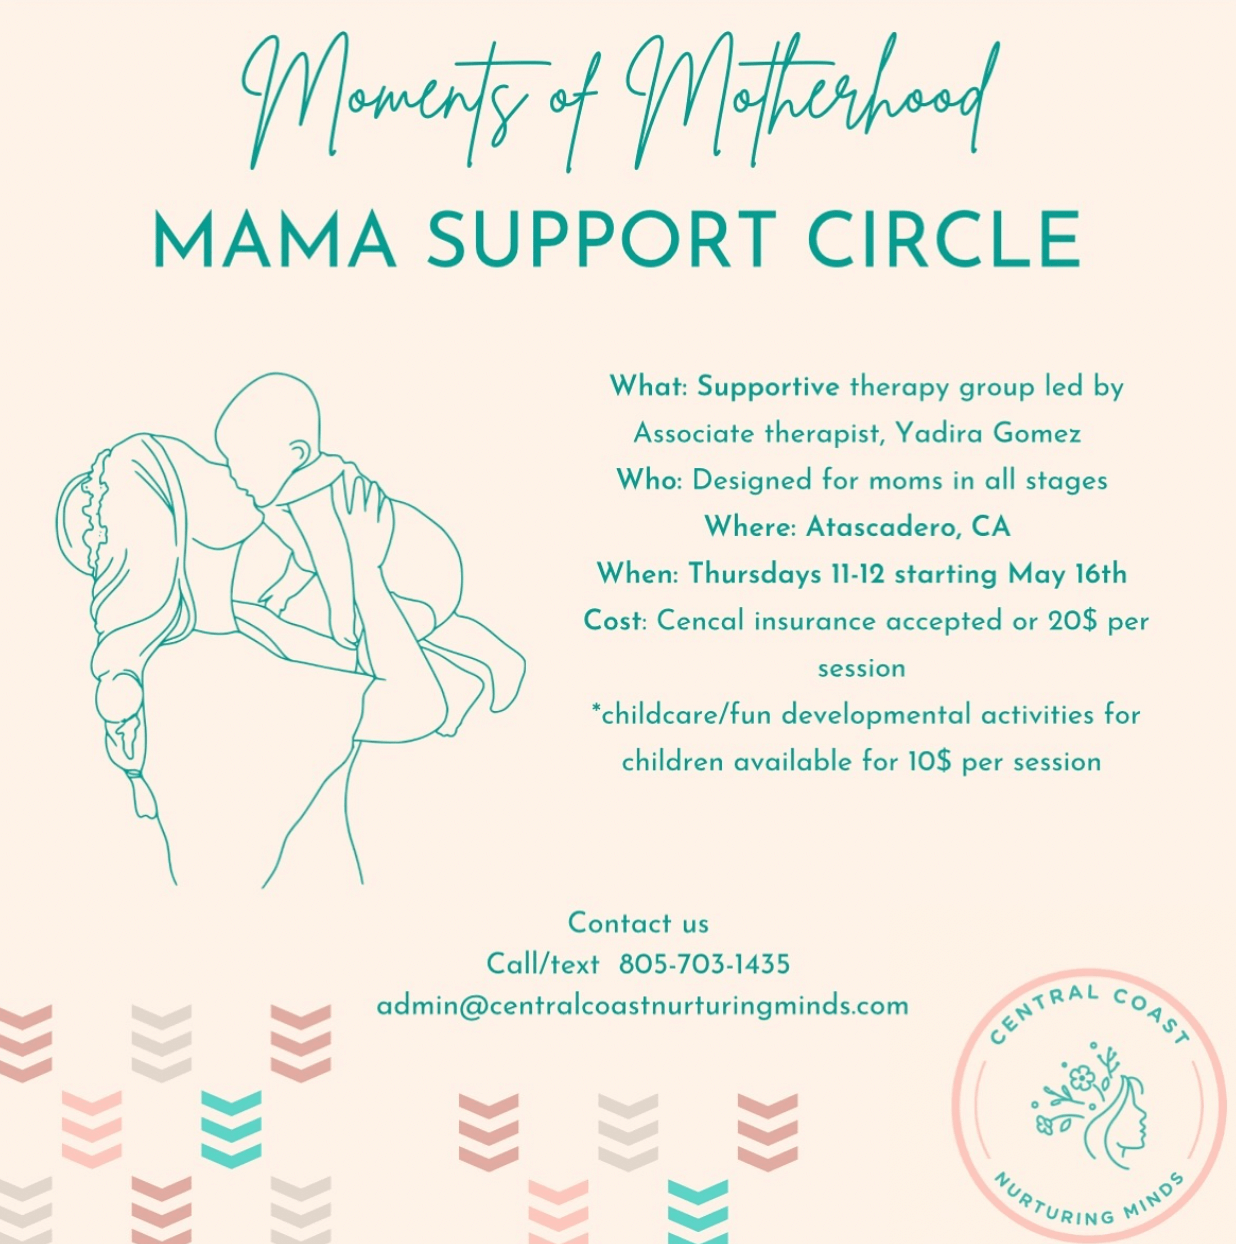 Moments of Motherhood: Mama Support Circle image